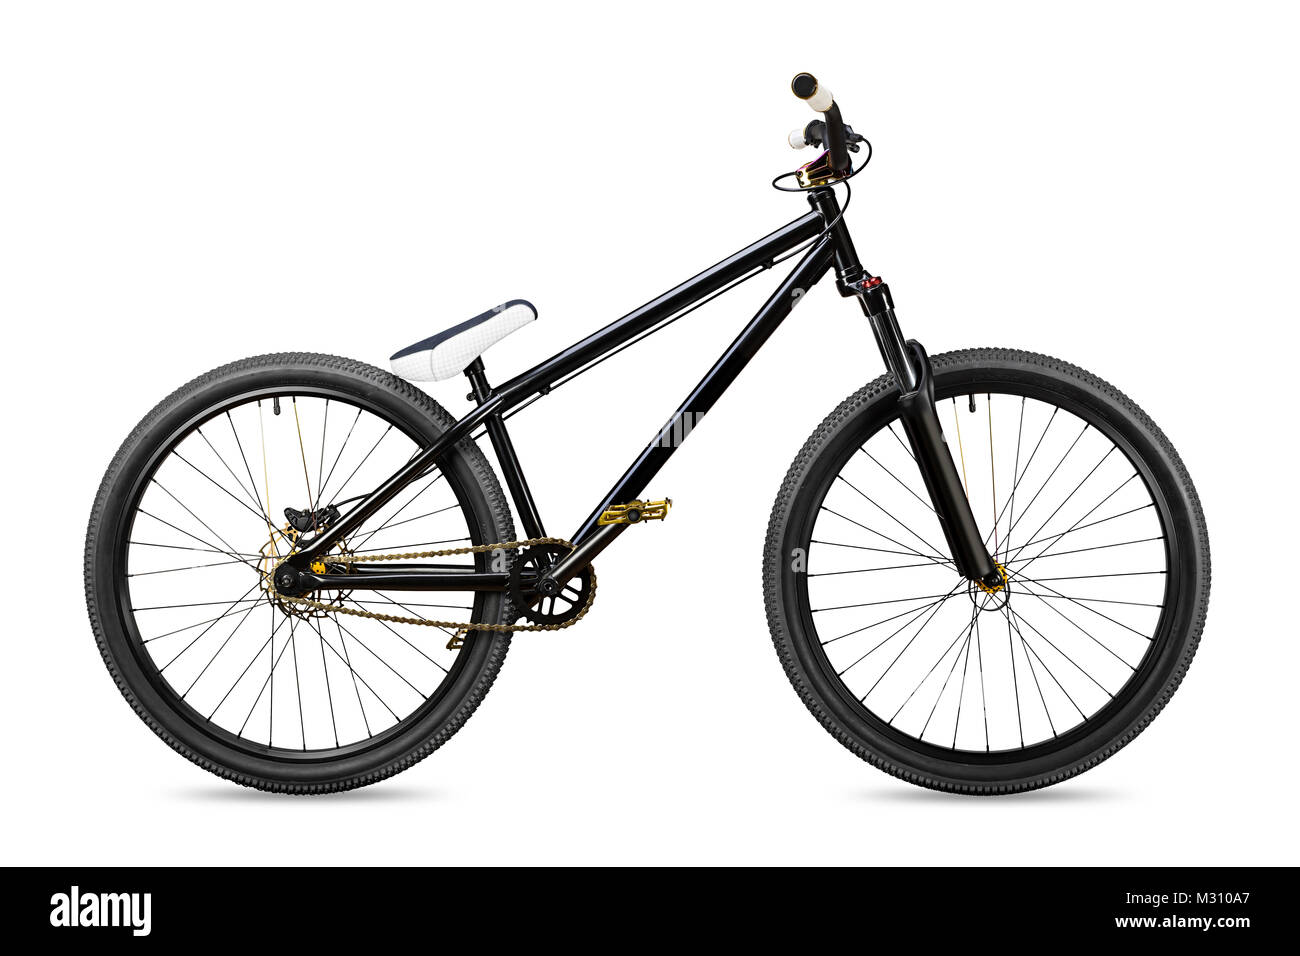 black gold slopestyle dirt jump bike bicycle isolated on white background Stock Photo